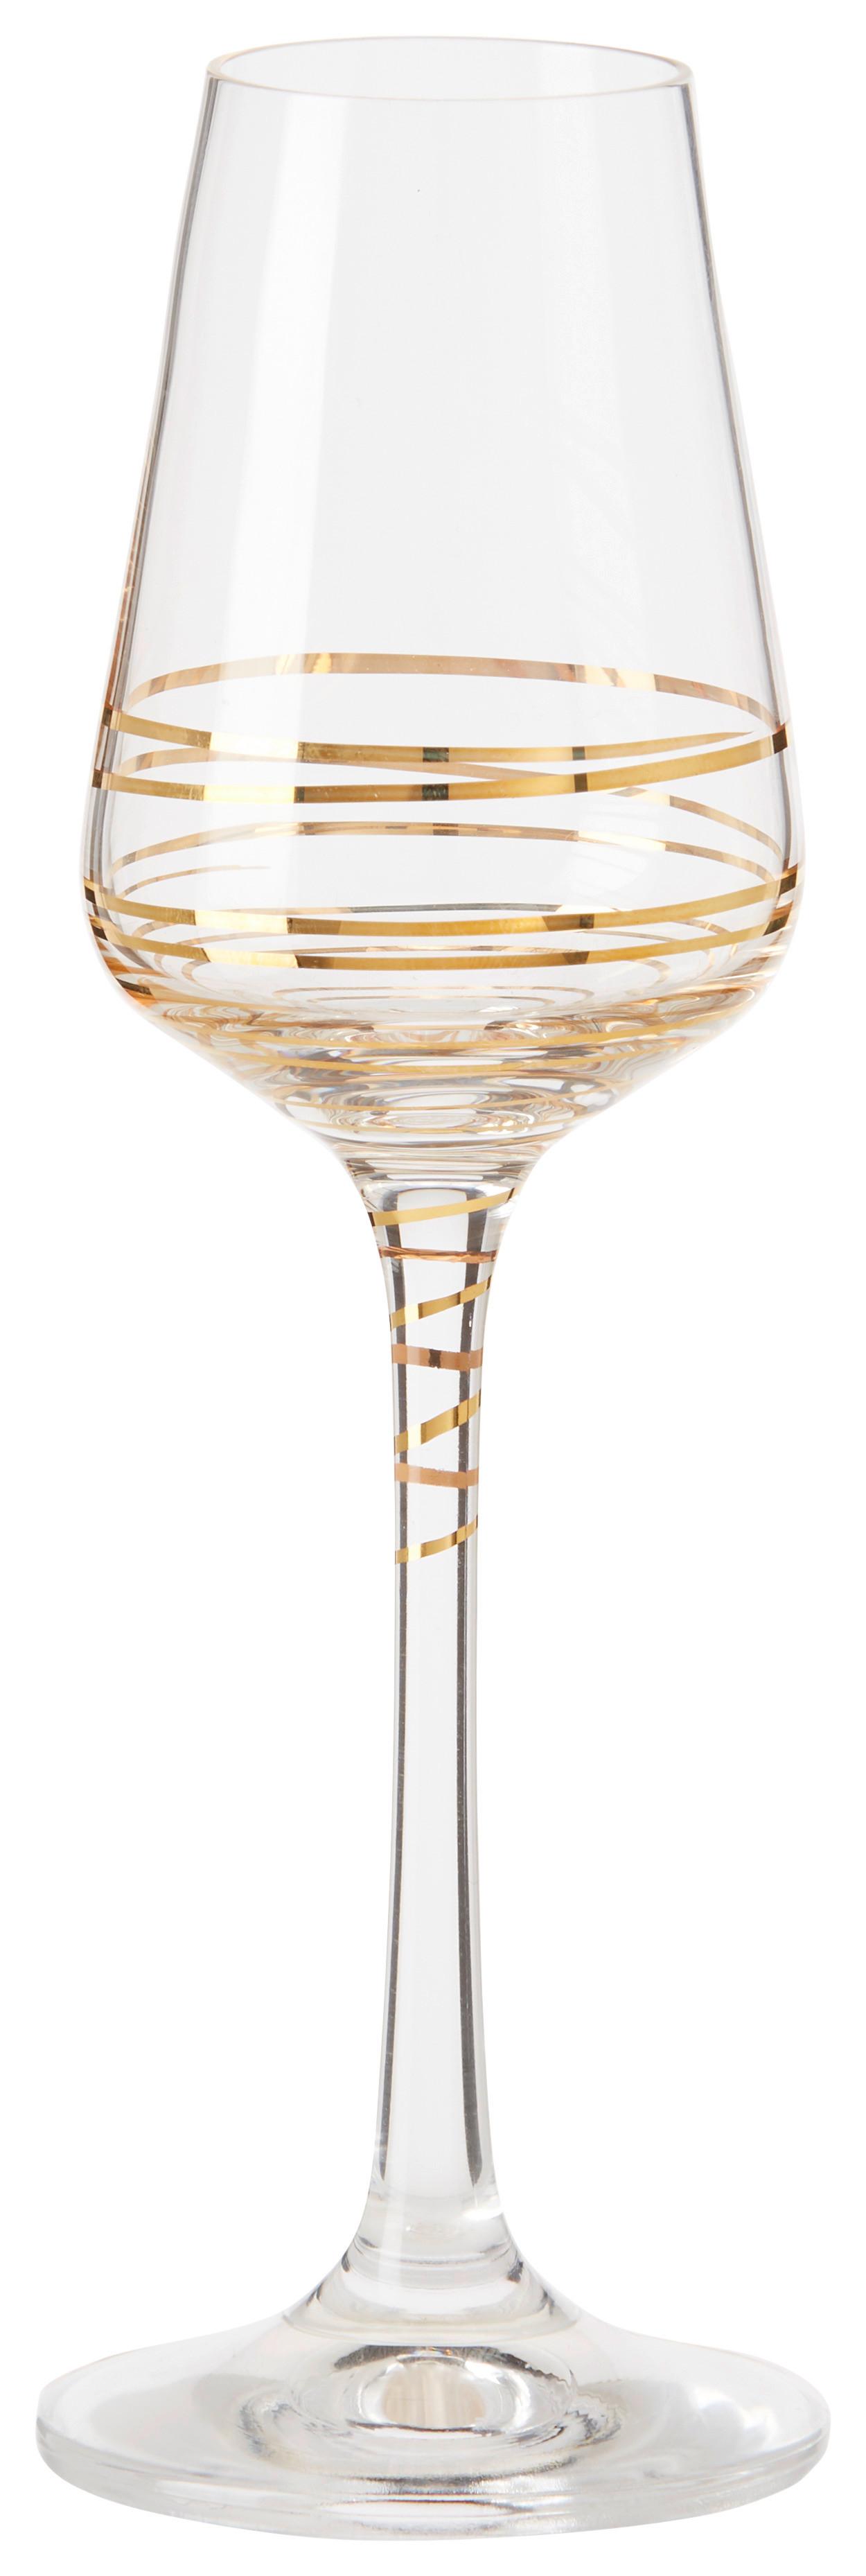 Schnapsglas Elegance ca. 65ml - Klar/Goldfarben, MODERN, Glas (0,065l) - Bohemia